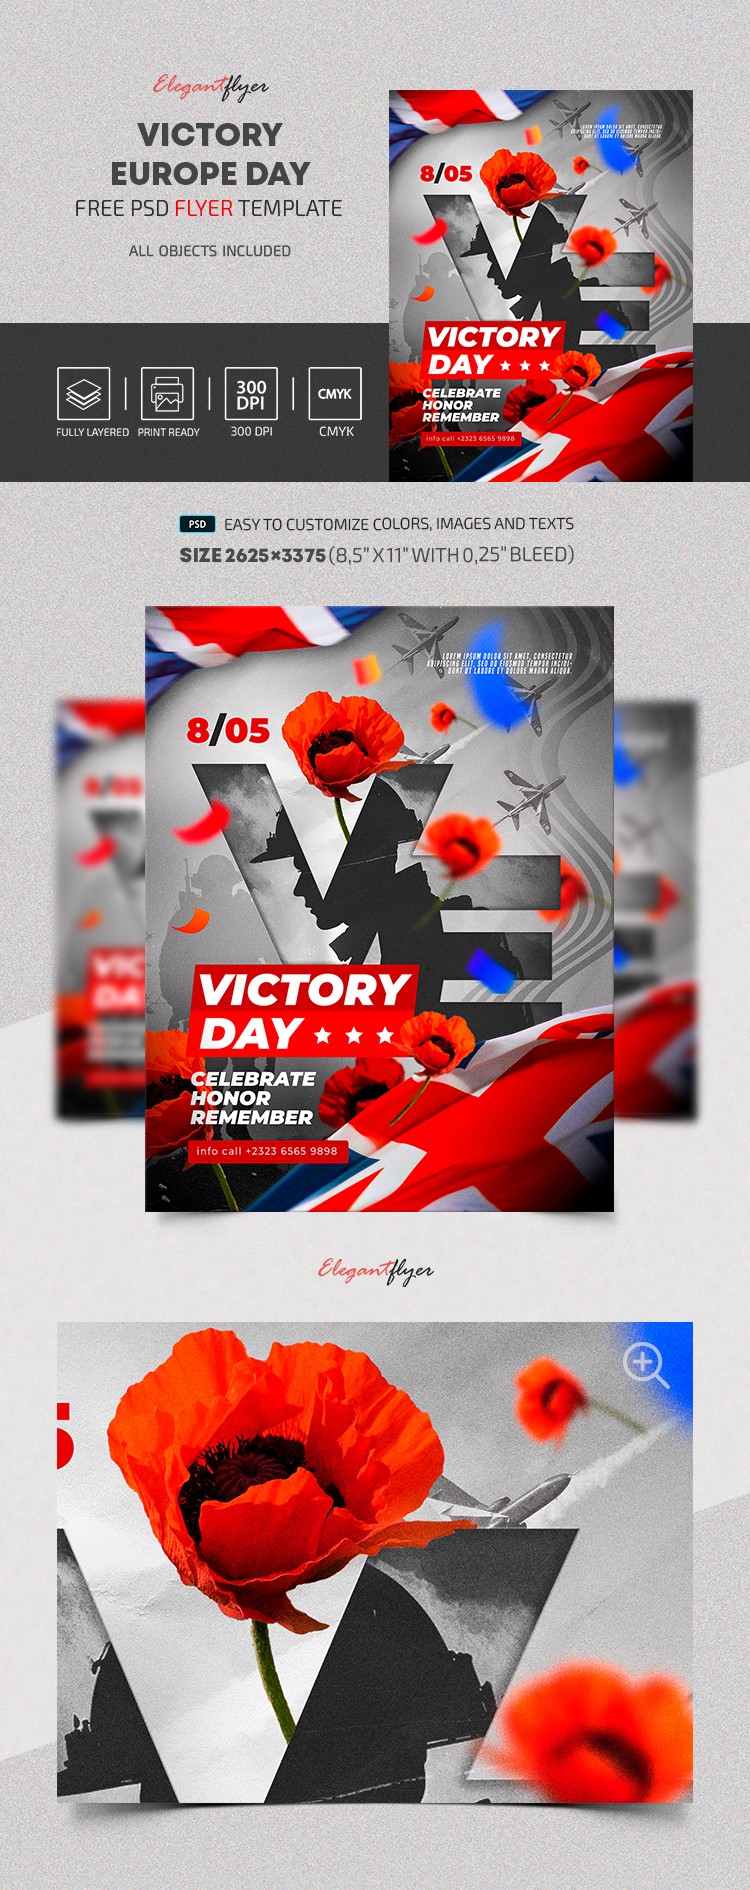 Victory Day in Europe by ElegantFlyer